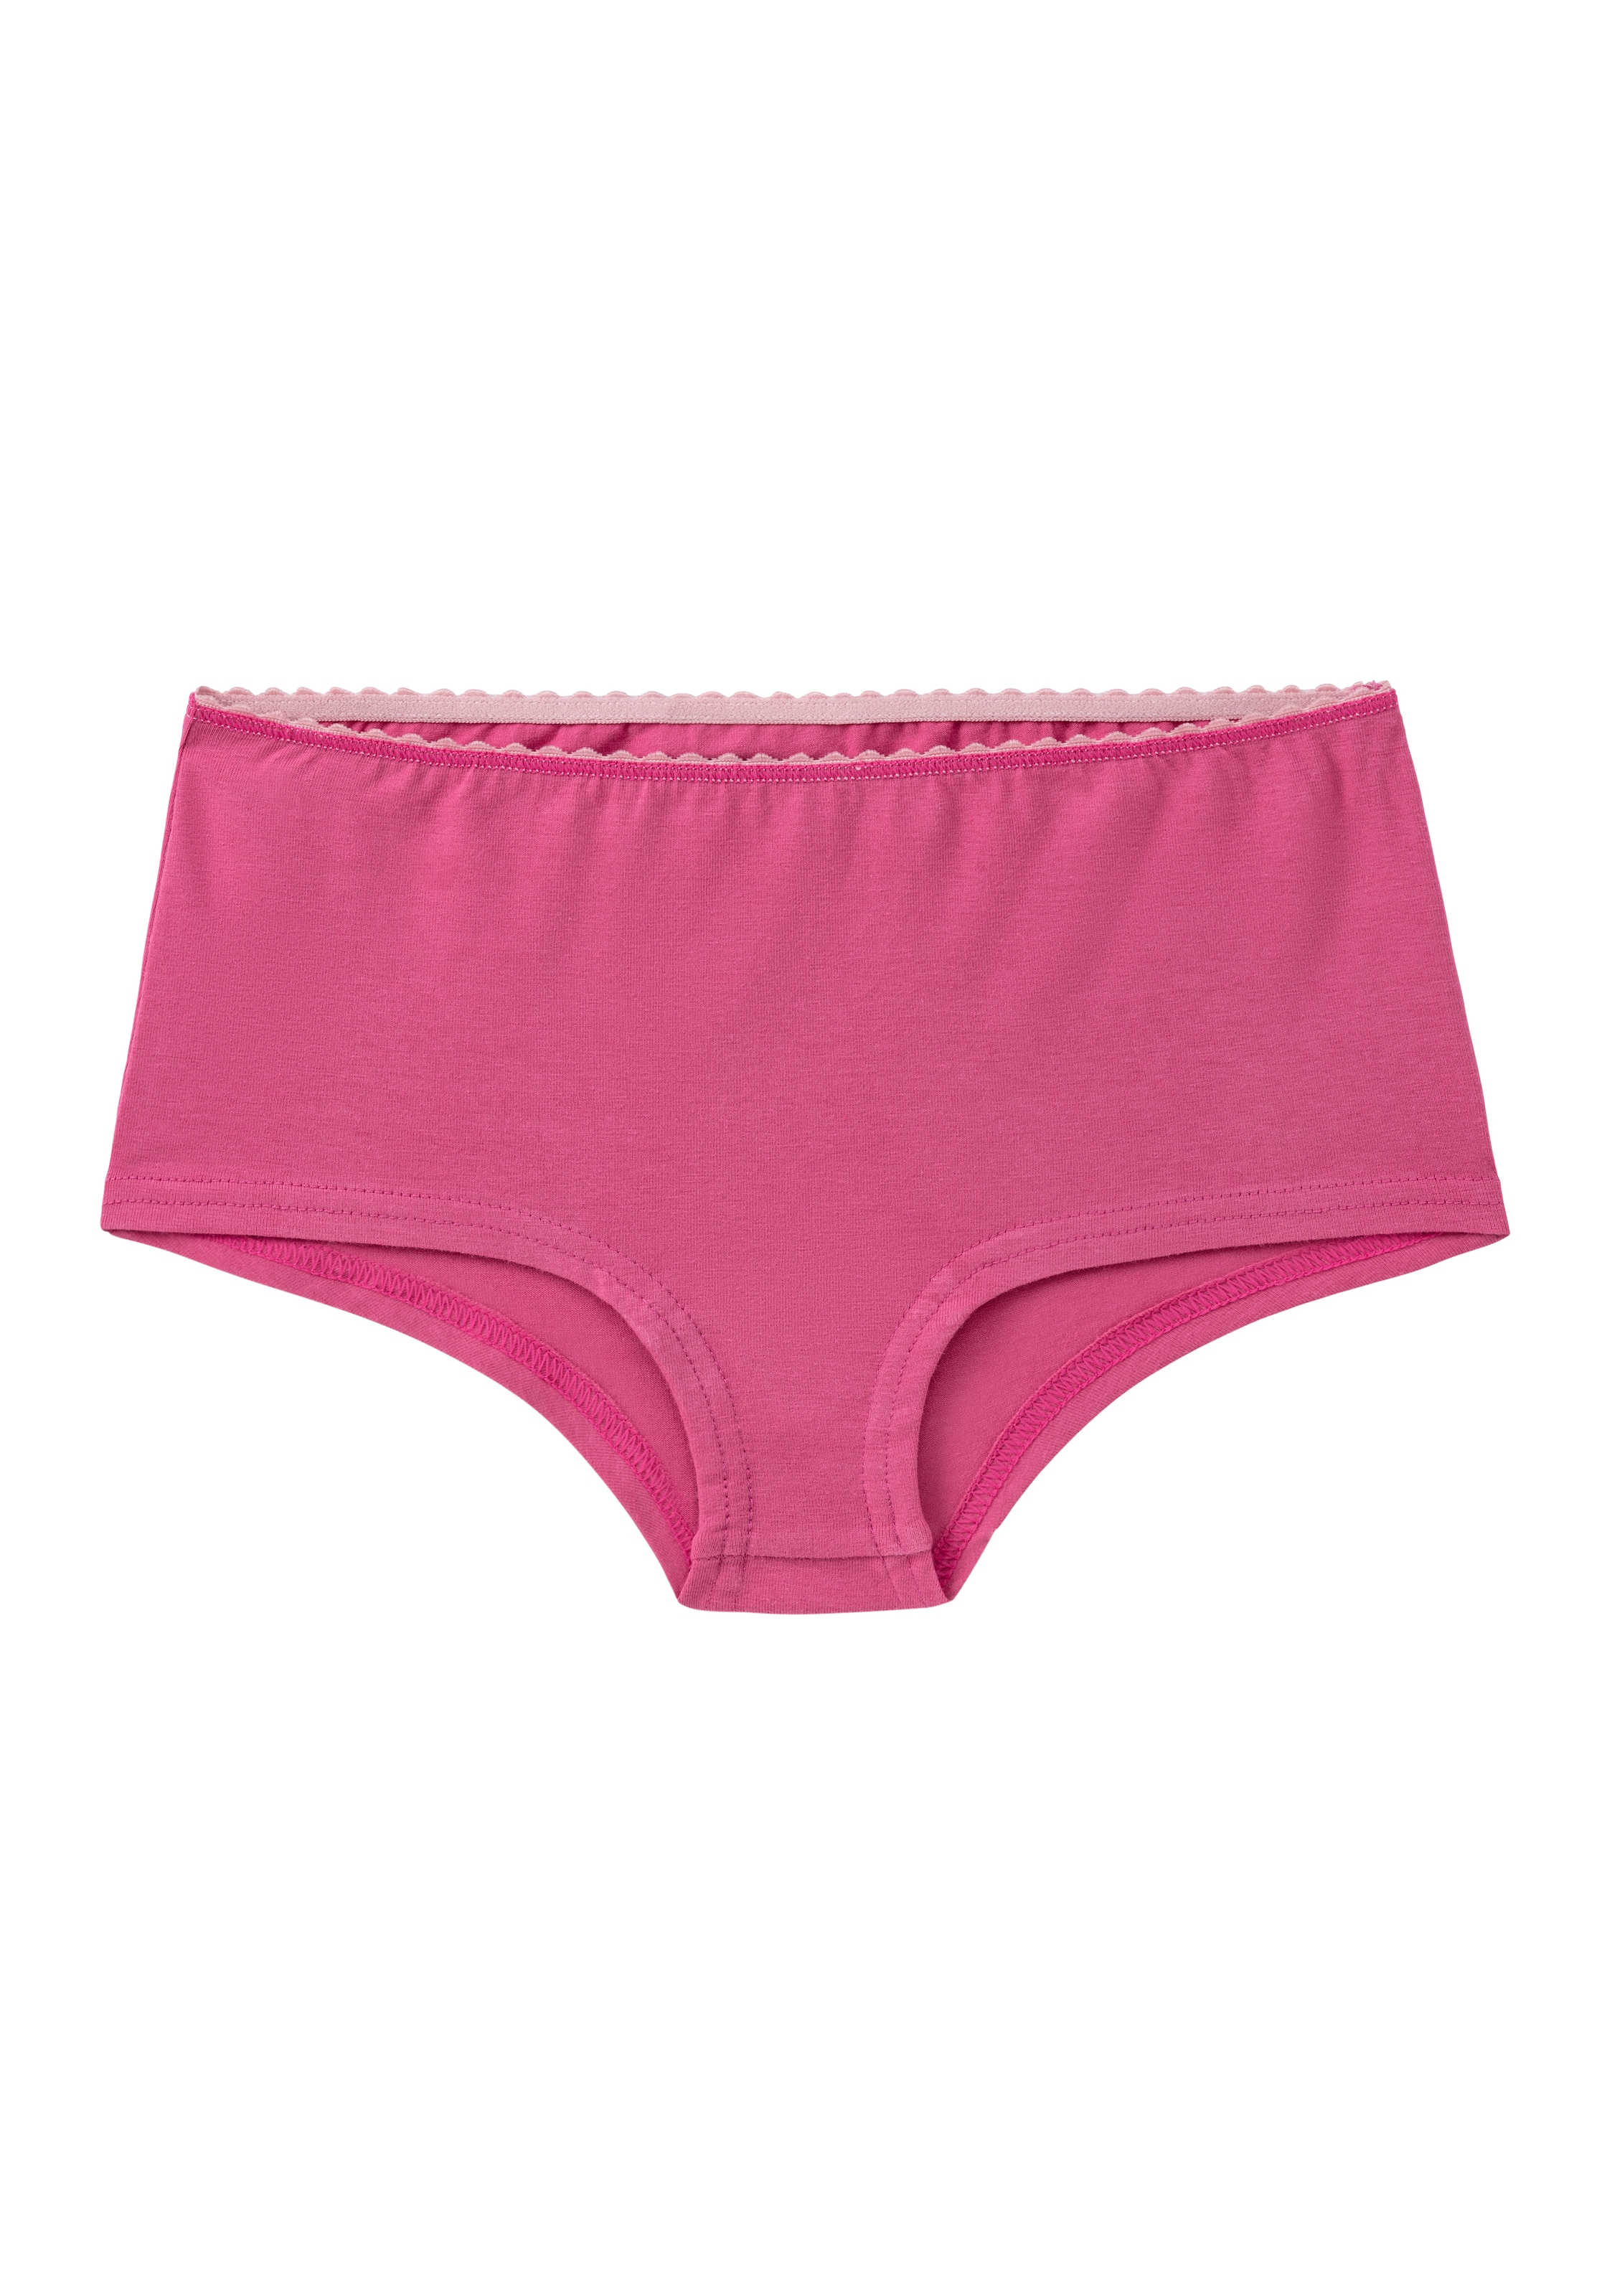 + Vivance Shop Millefleur-Design Set: Uni Panty), I\'m in mit online einer | (4 Bustier, walking Packung tlg.,